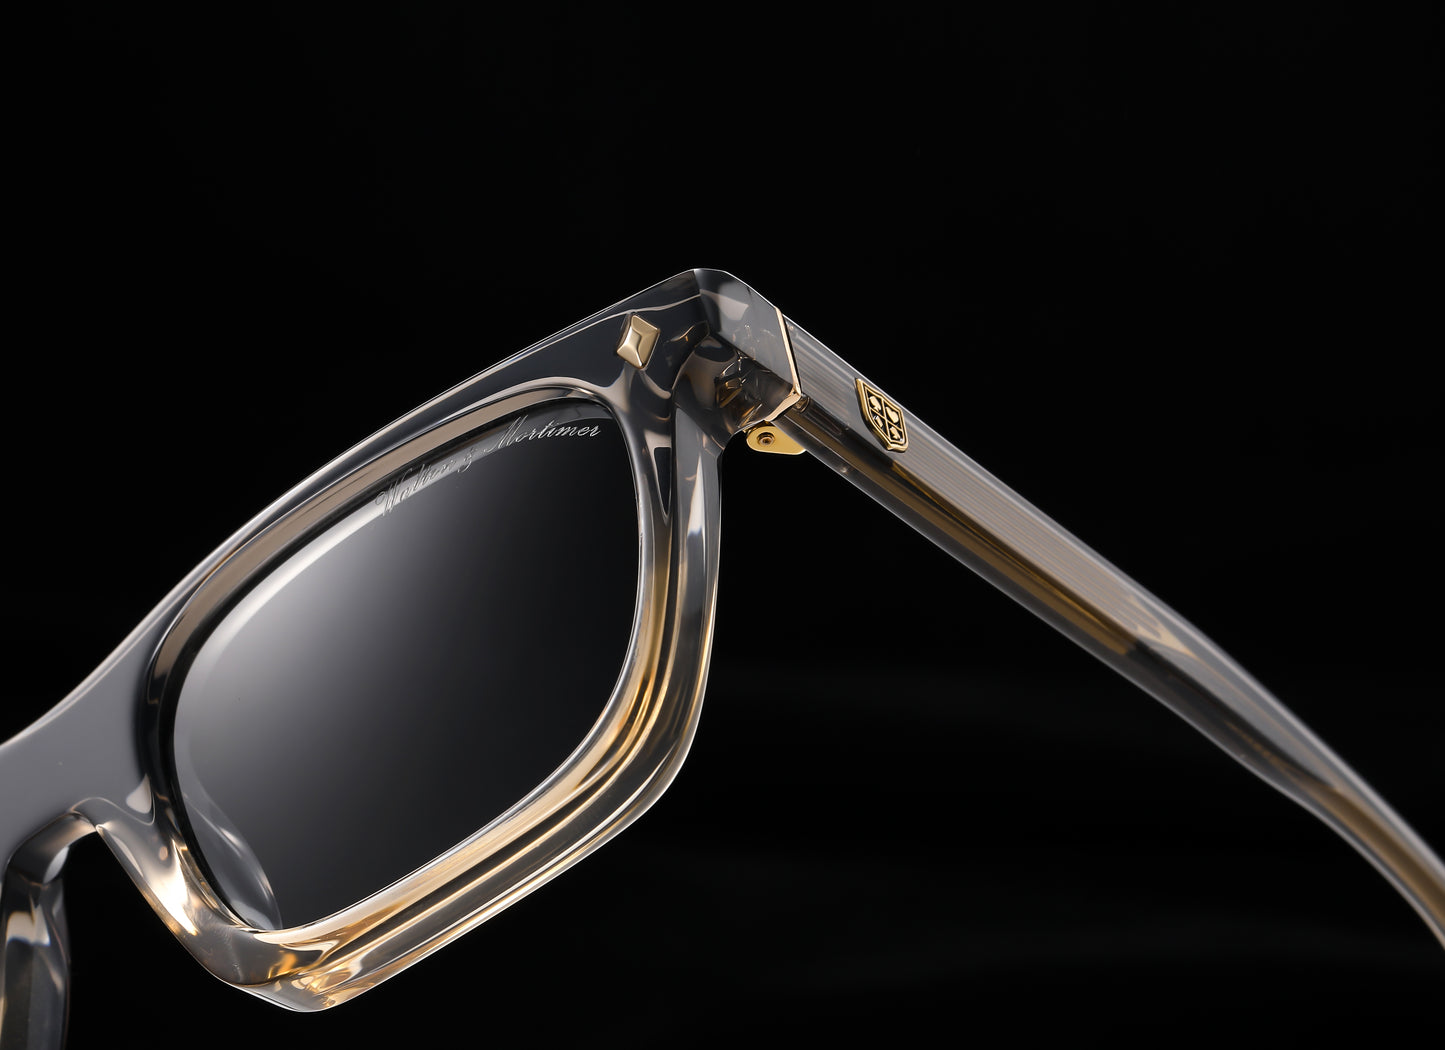 Walton & Mortimer® NO. 54: " Inferno" Transparant Gray Sunglasses